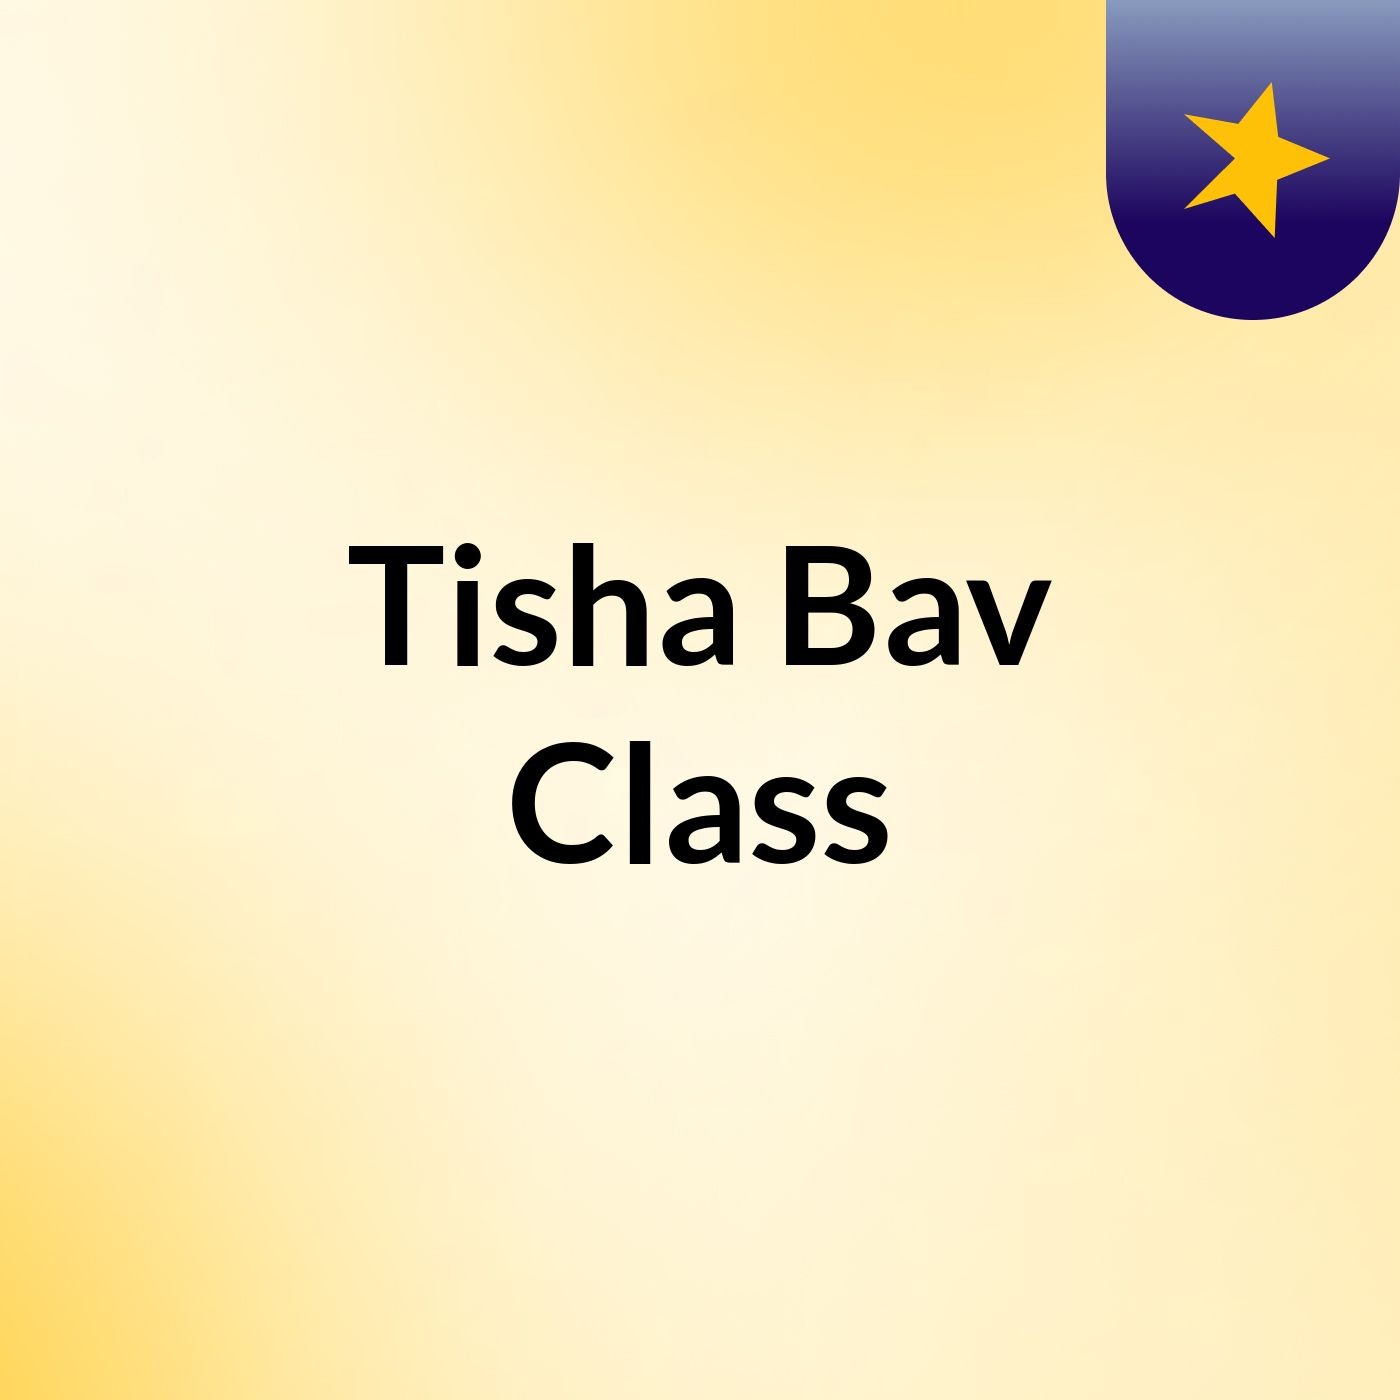 Episode 2 - Tisha Bav Class